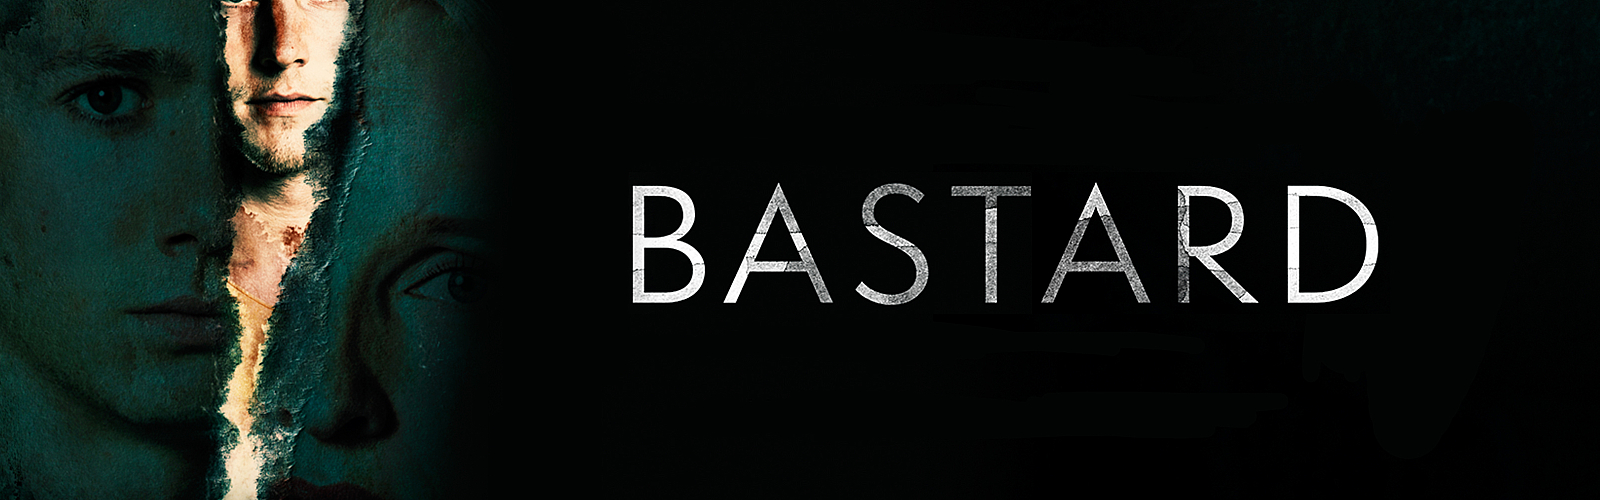 Bastard 19 Incredible Film